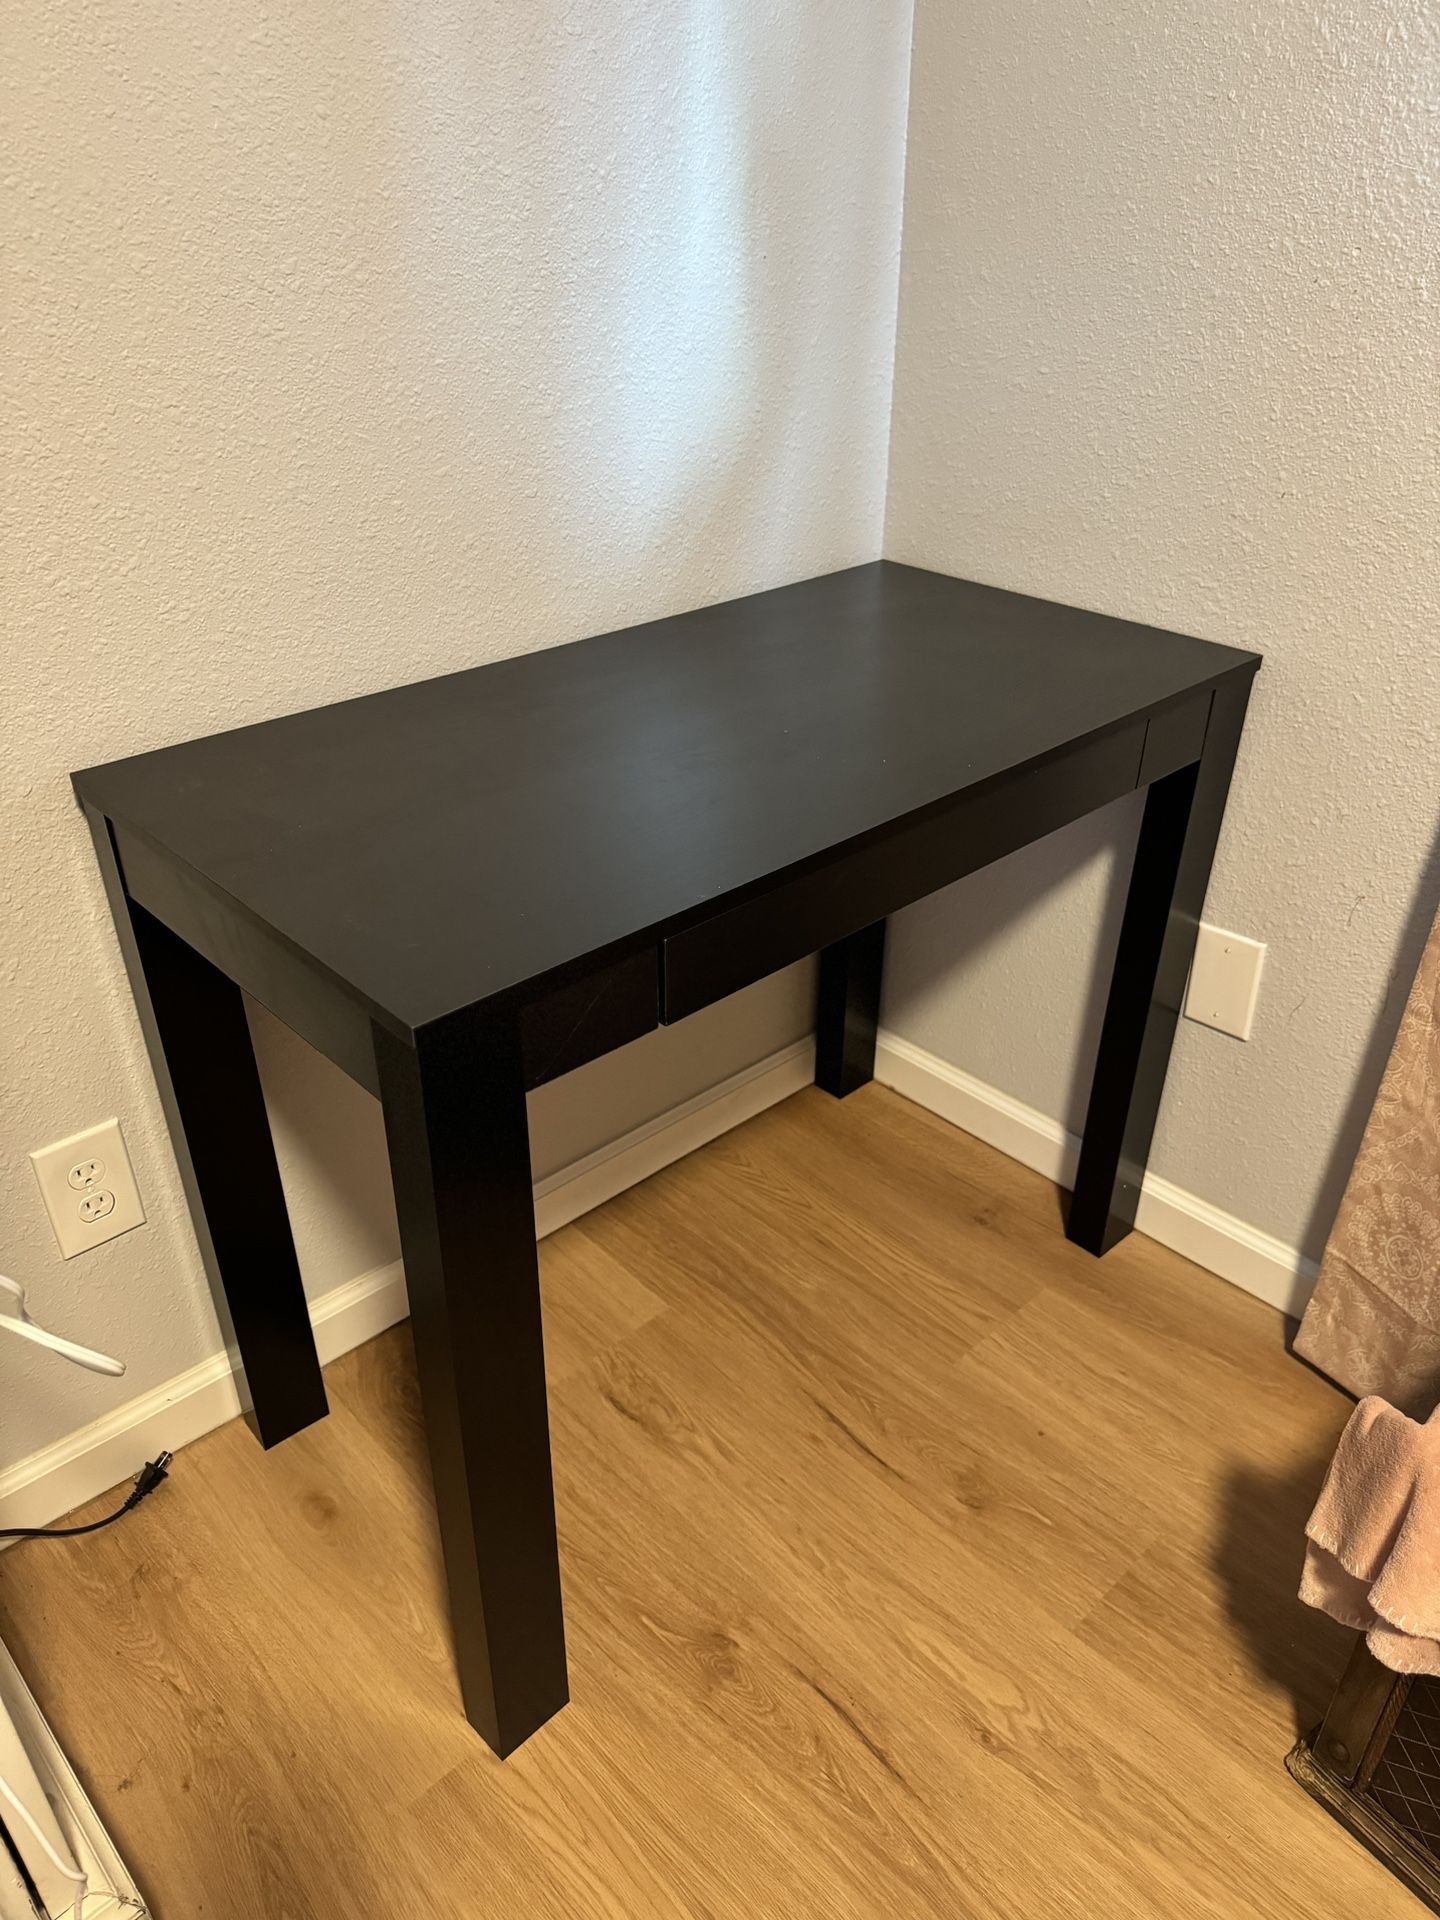 Brand New Desk/Vanity/Entry Way Table